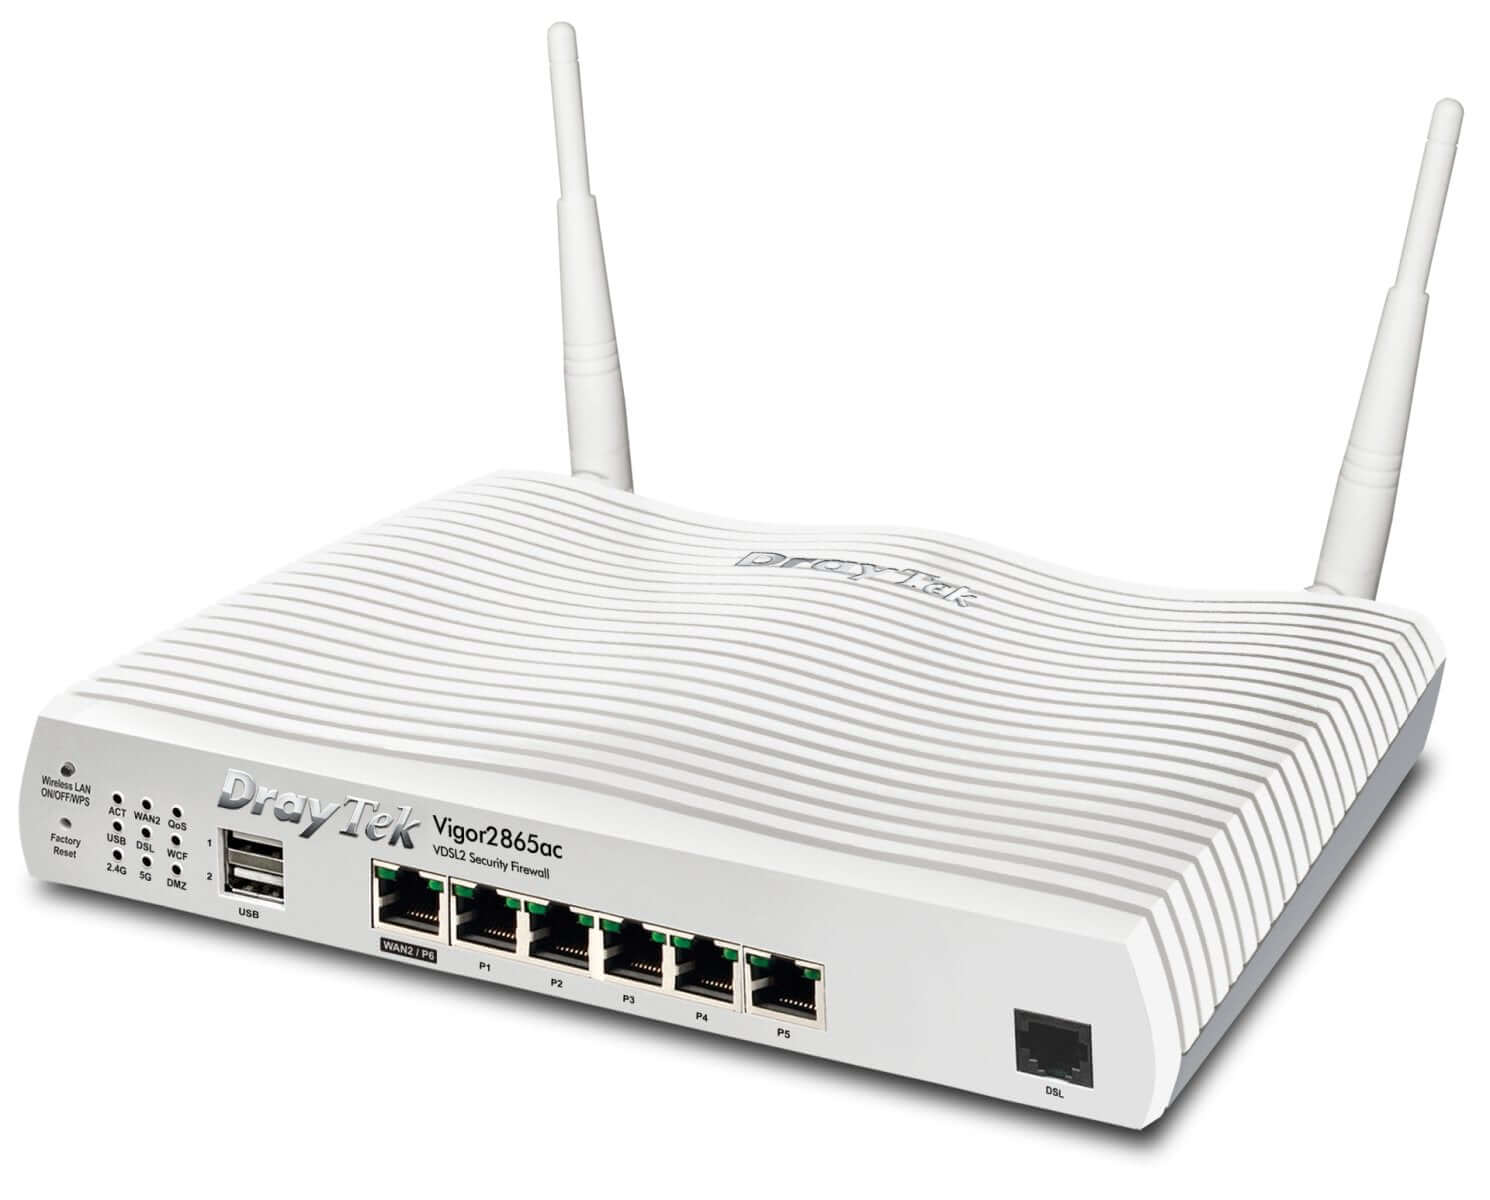 DrayTek 2865AC Multi-WAN Firewall VPN Router Right View